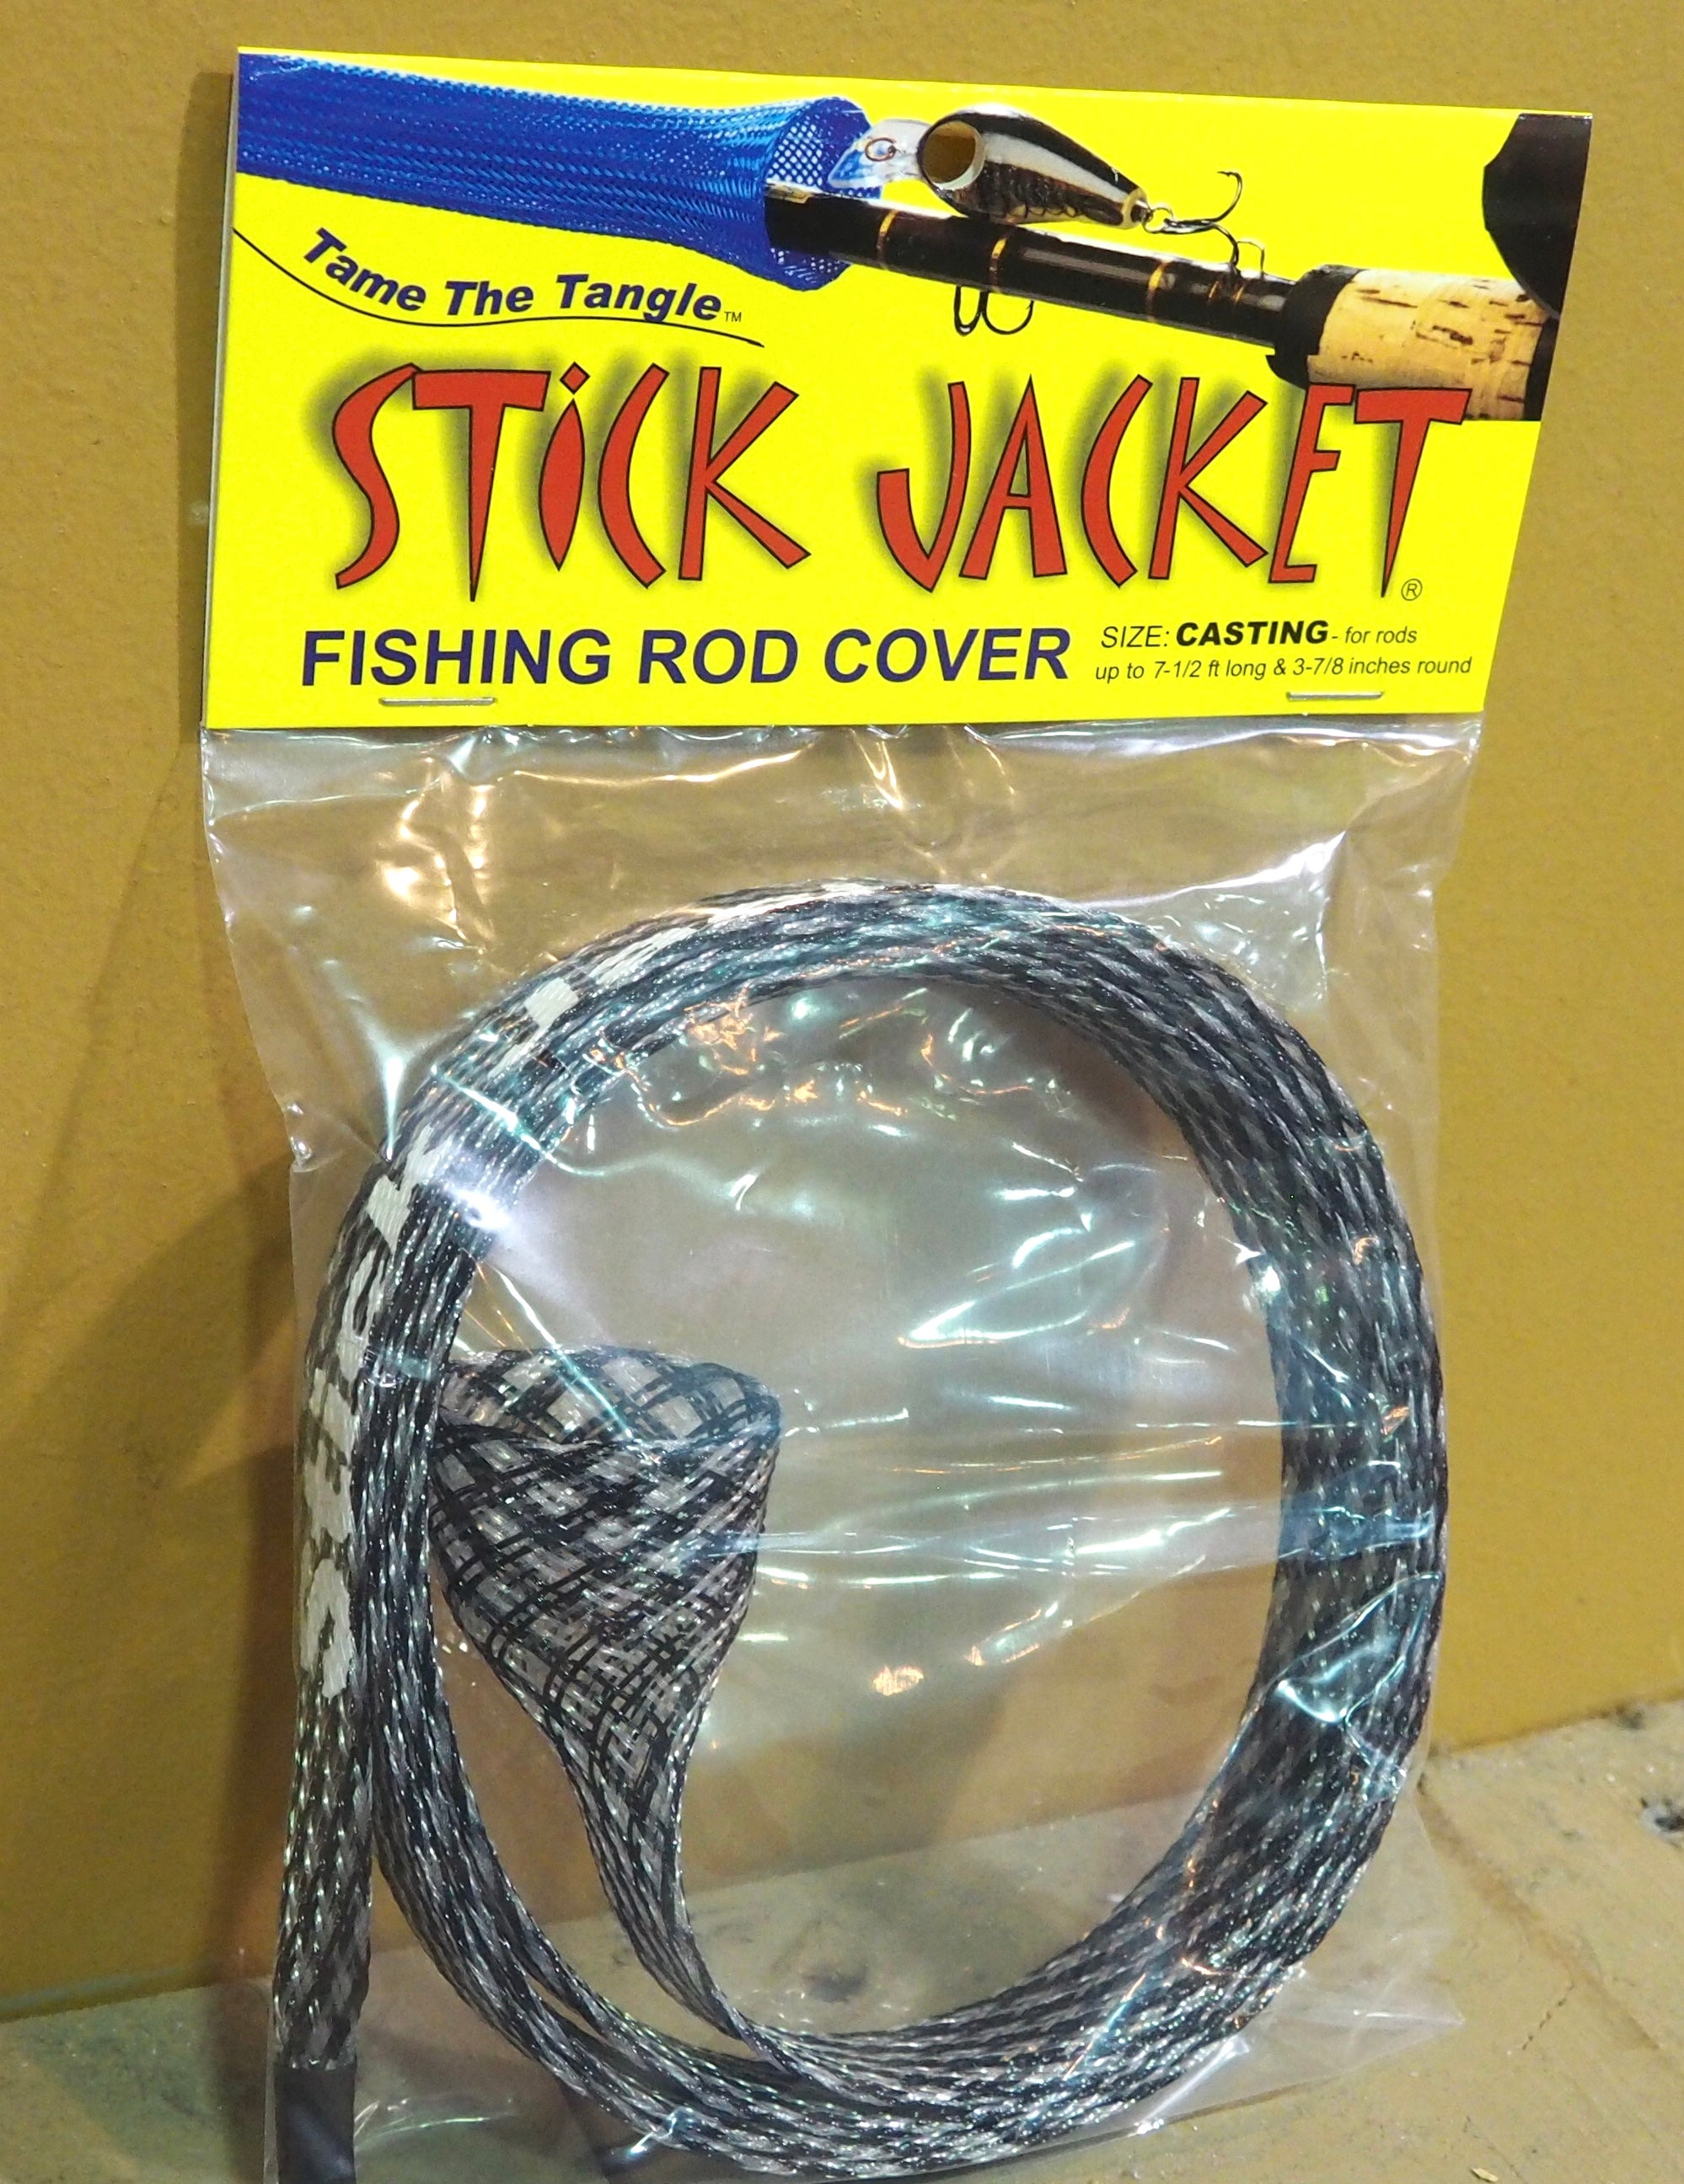 Stick Jacket Fishing Rod Covers Casting Size